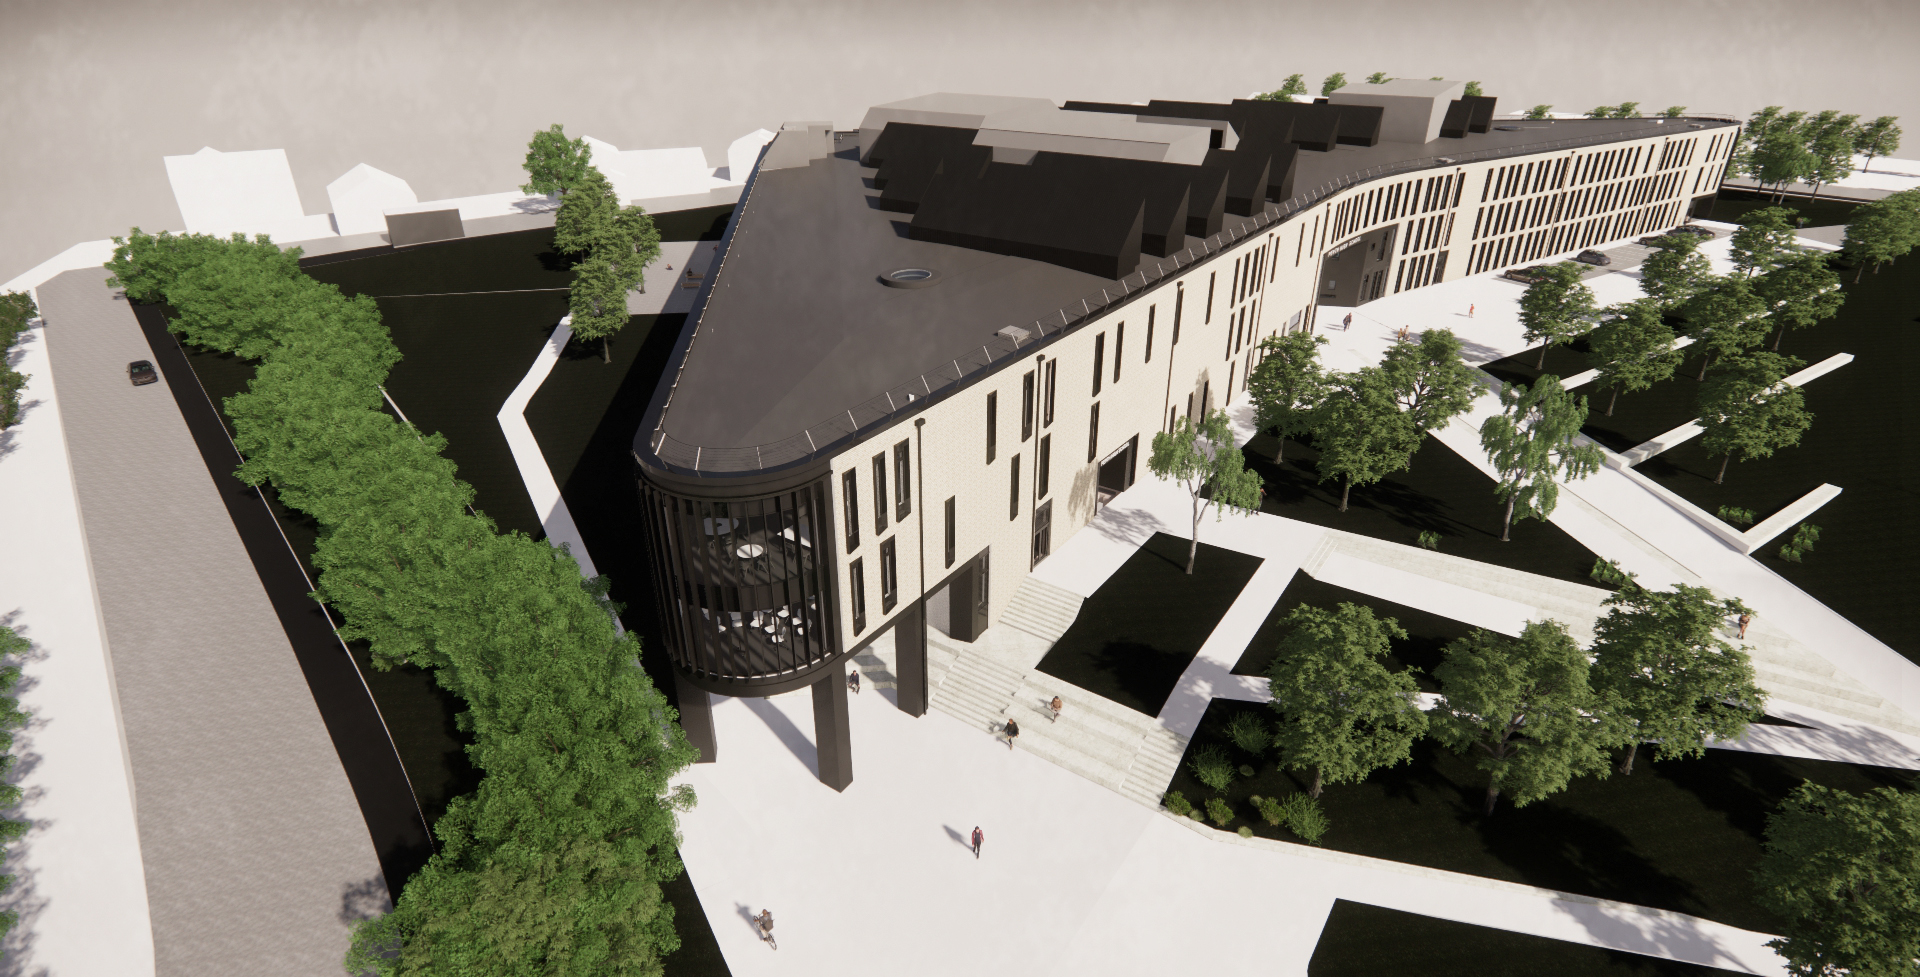 Passivhaus-designed Perth High School given go-ahead